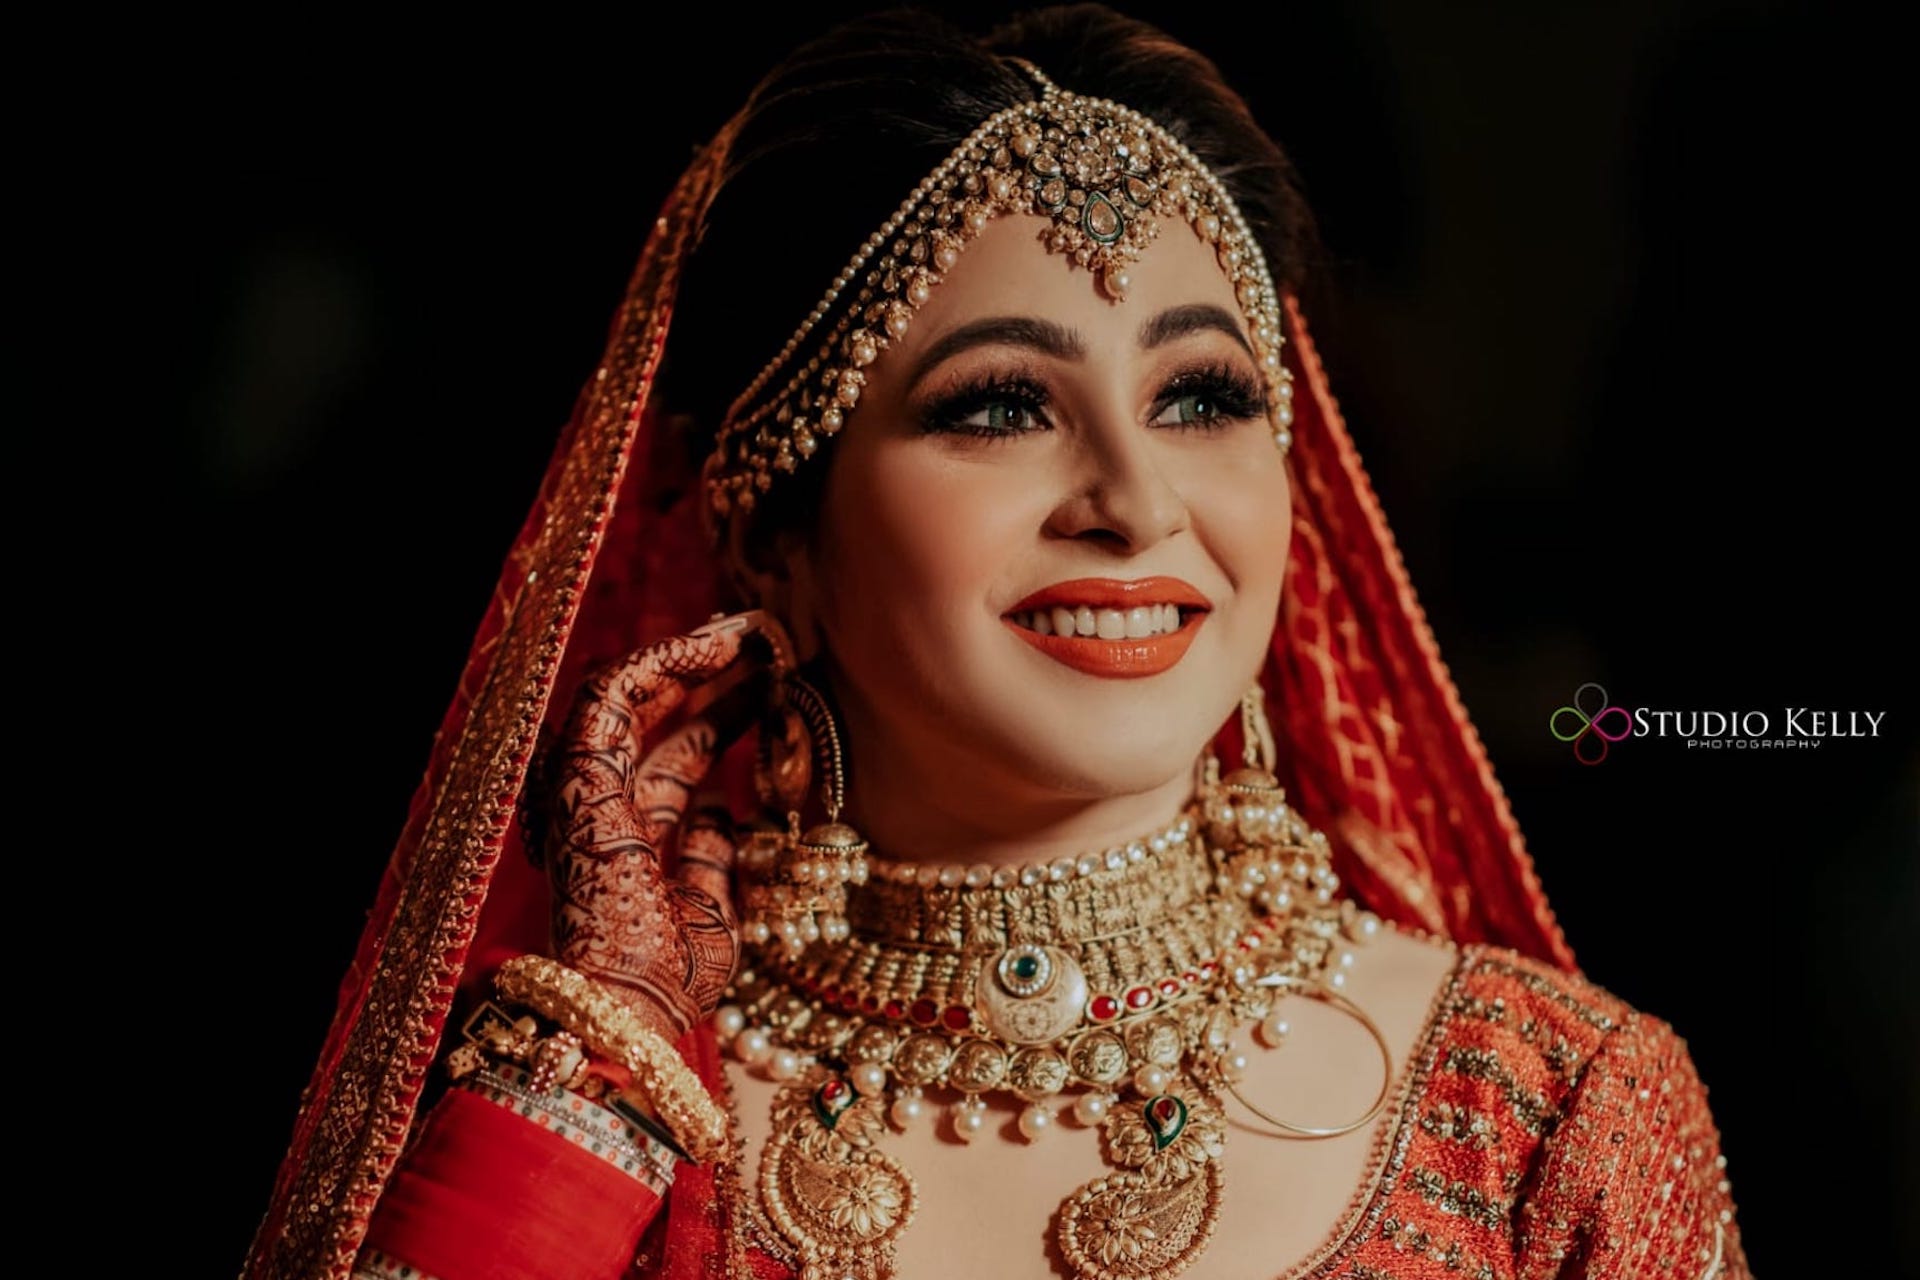 Candid wedding photographers in delhi, india Studio Kelly